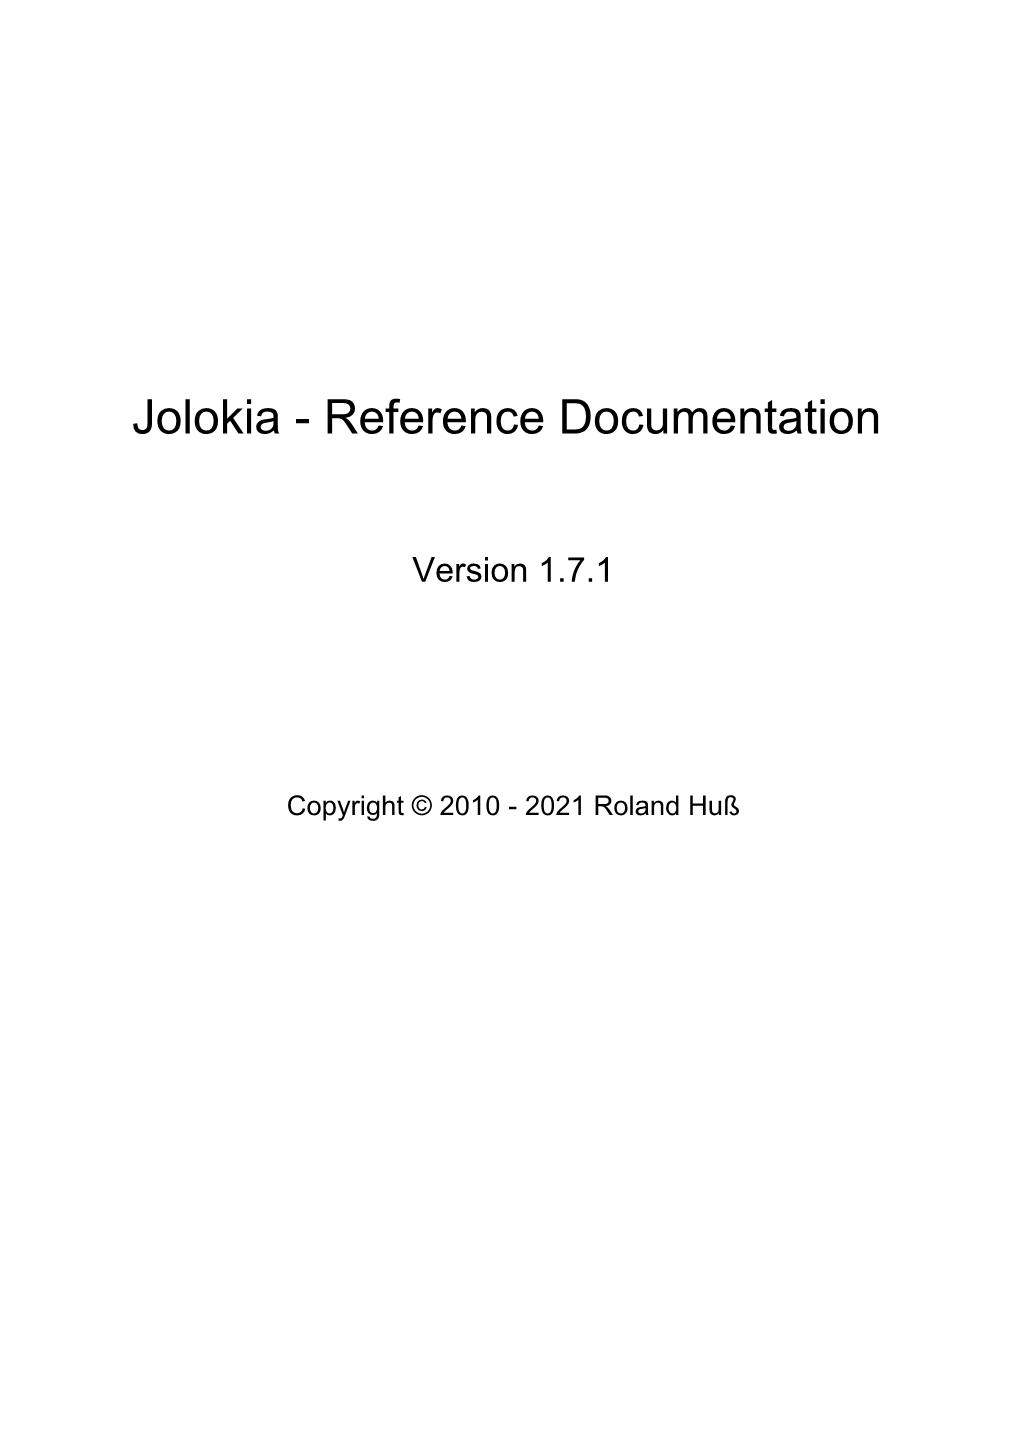 Reference Documentation